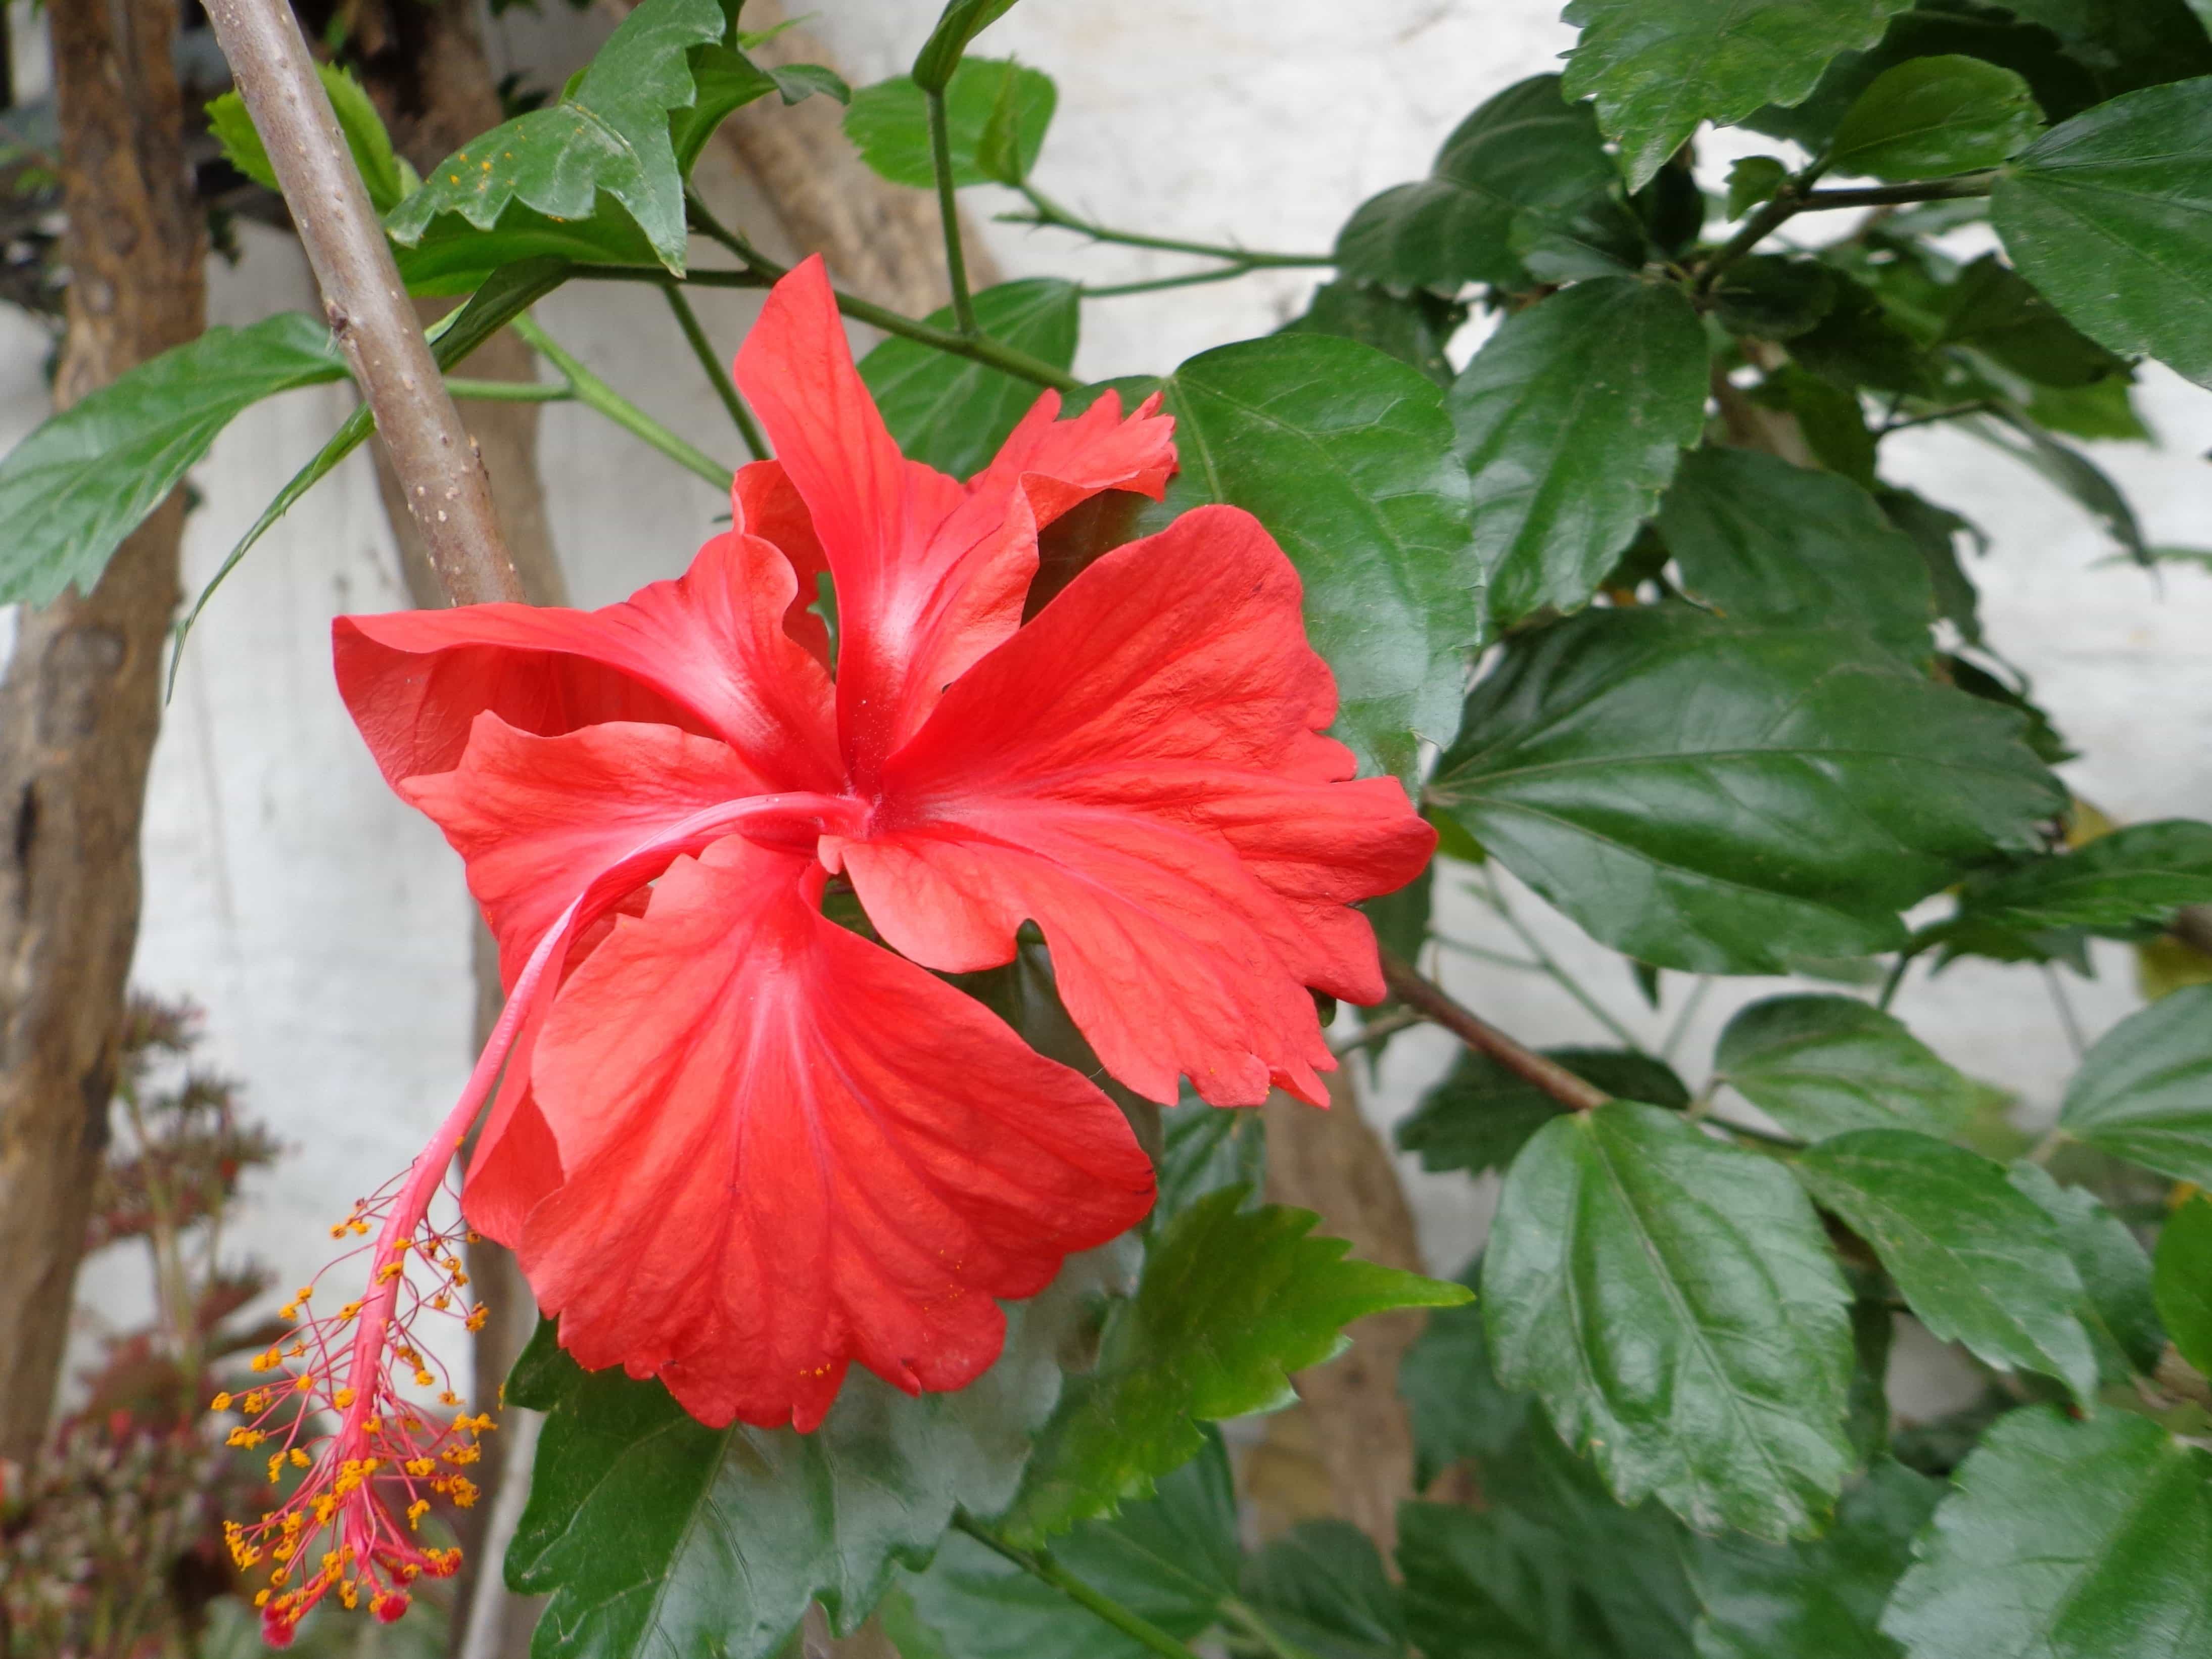 Imagen gratis: flor del hibisco, hoja, jardín, flor, naturaleza, planta, flor  roja, exótica